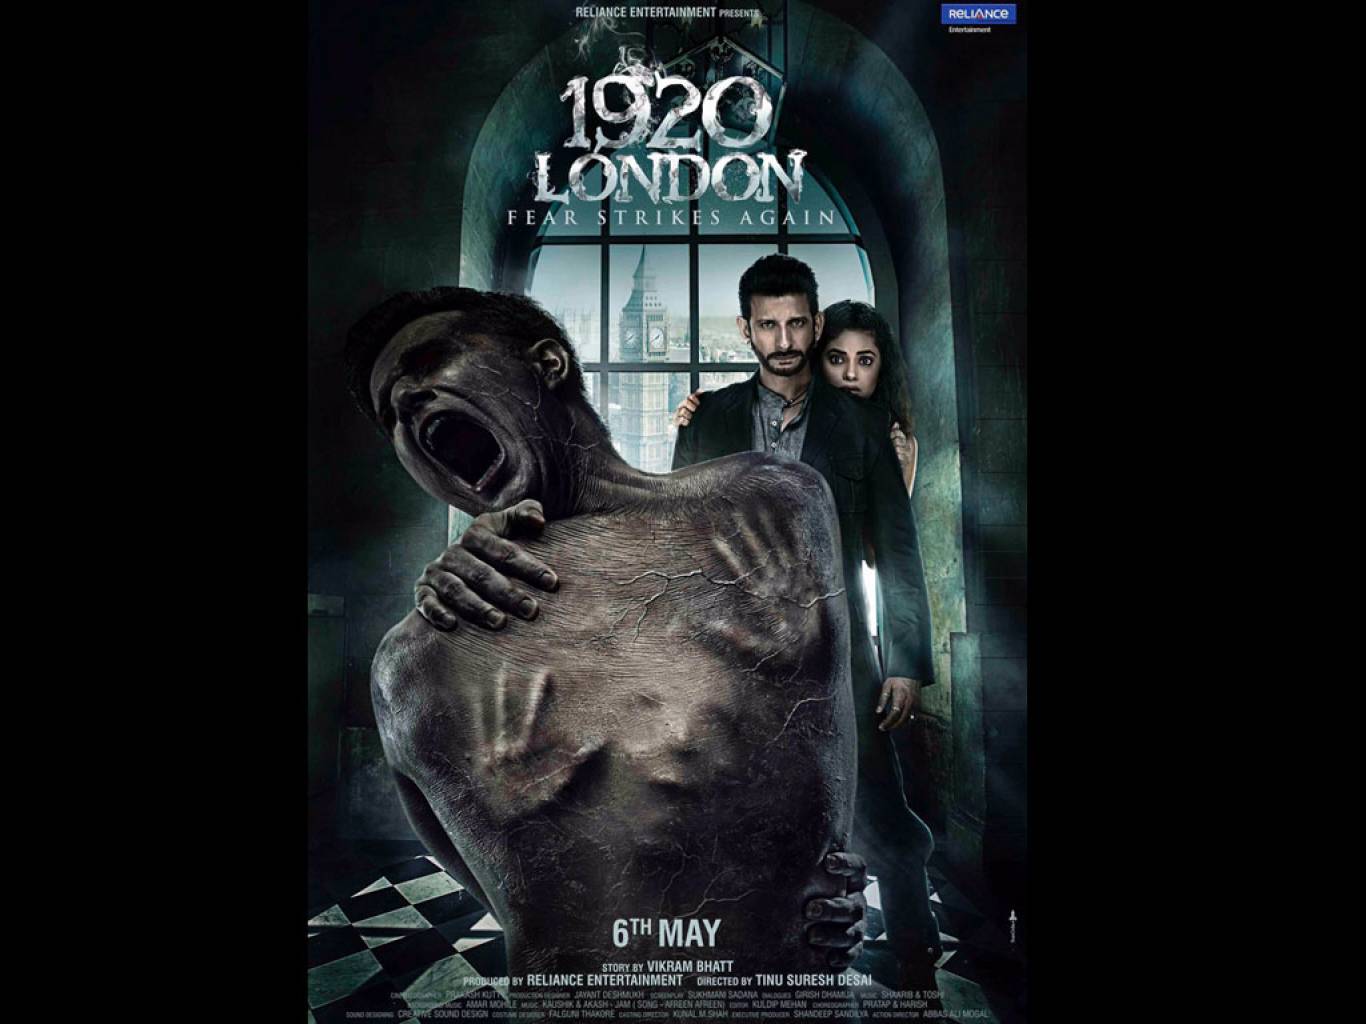 London Movie HD Wallpaper London HD Movie Wallpaper Free Download (1080p to 2K)